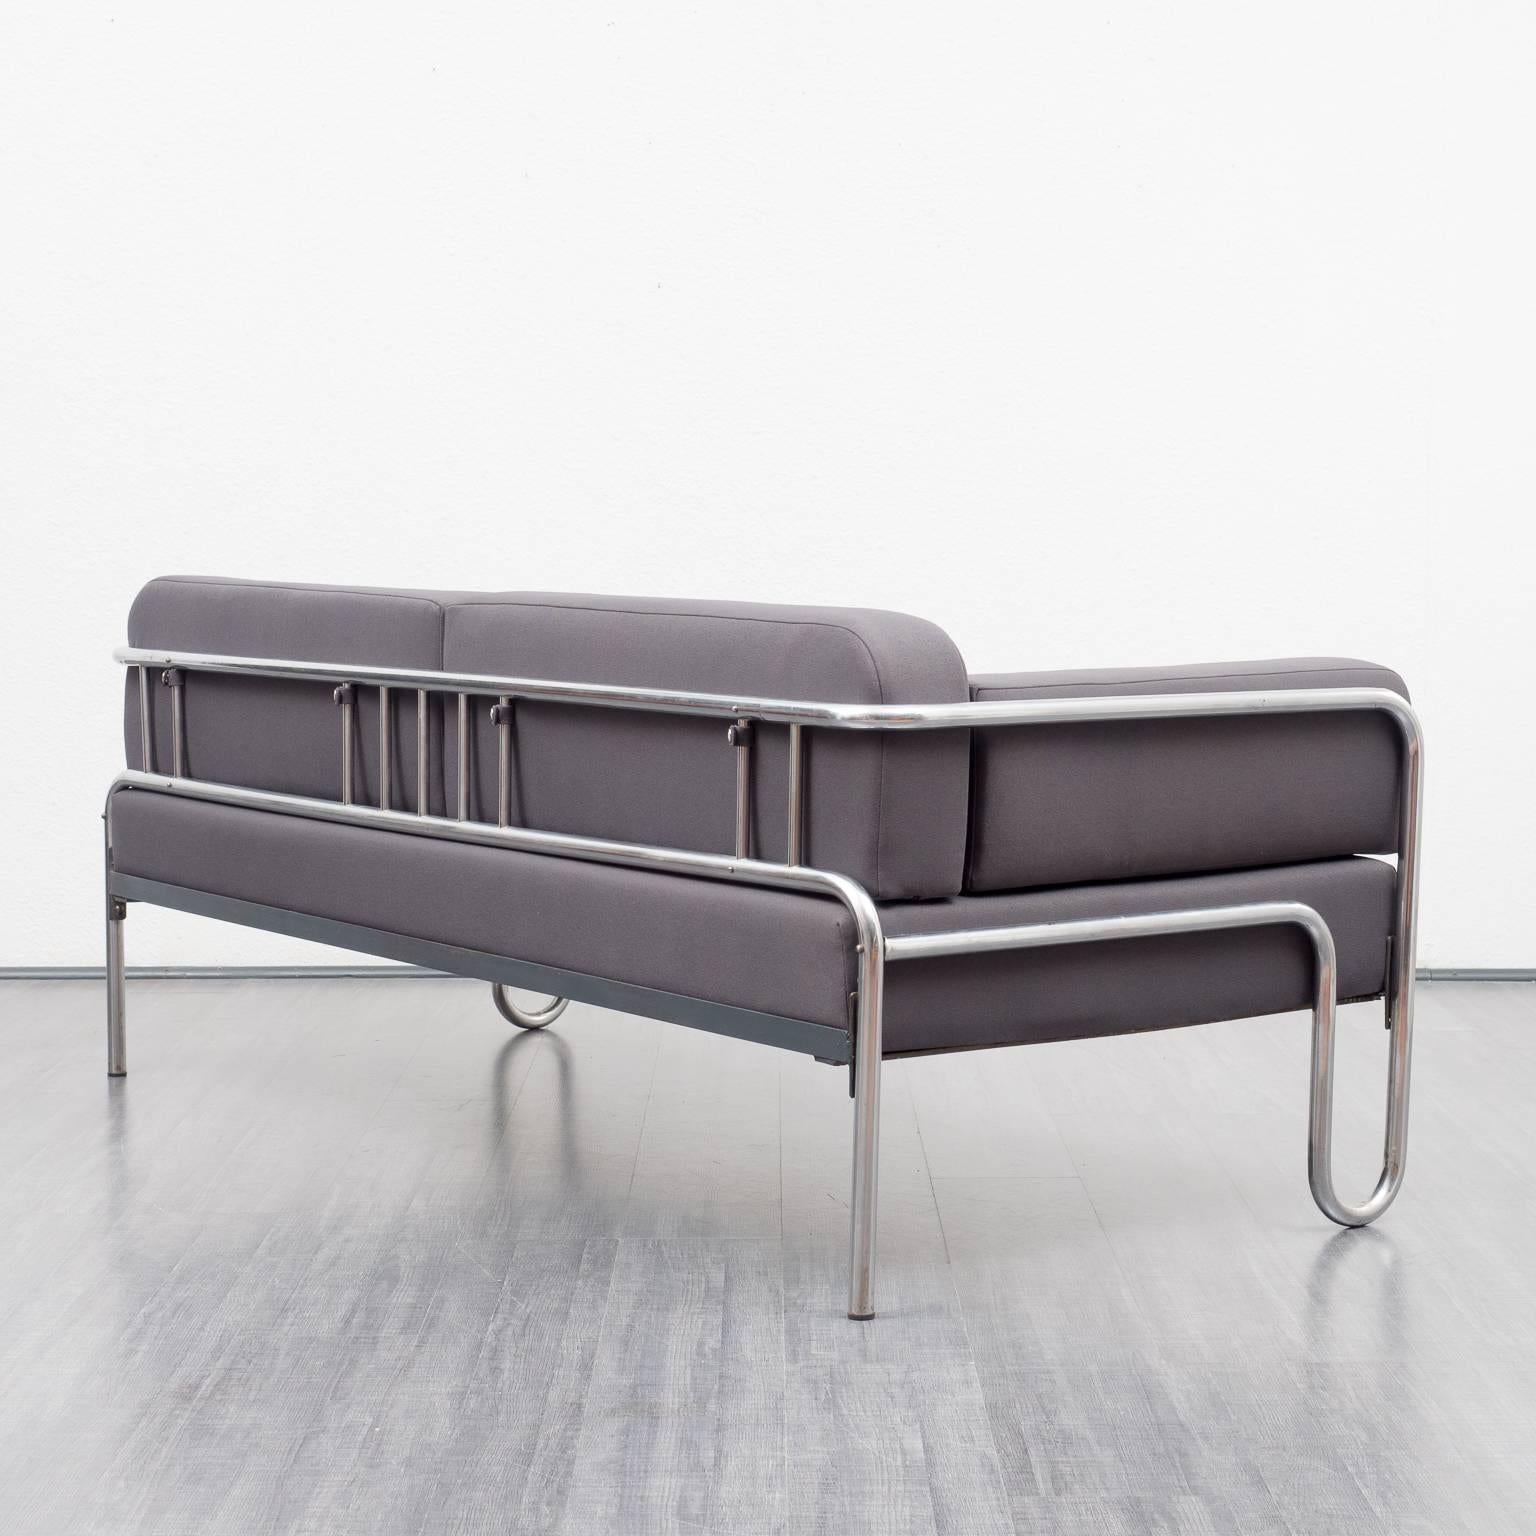 1930s Bauhaus Sofa, New Upholstery, Anthracite Fabric, Tubulair Steel Frame 2